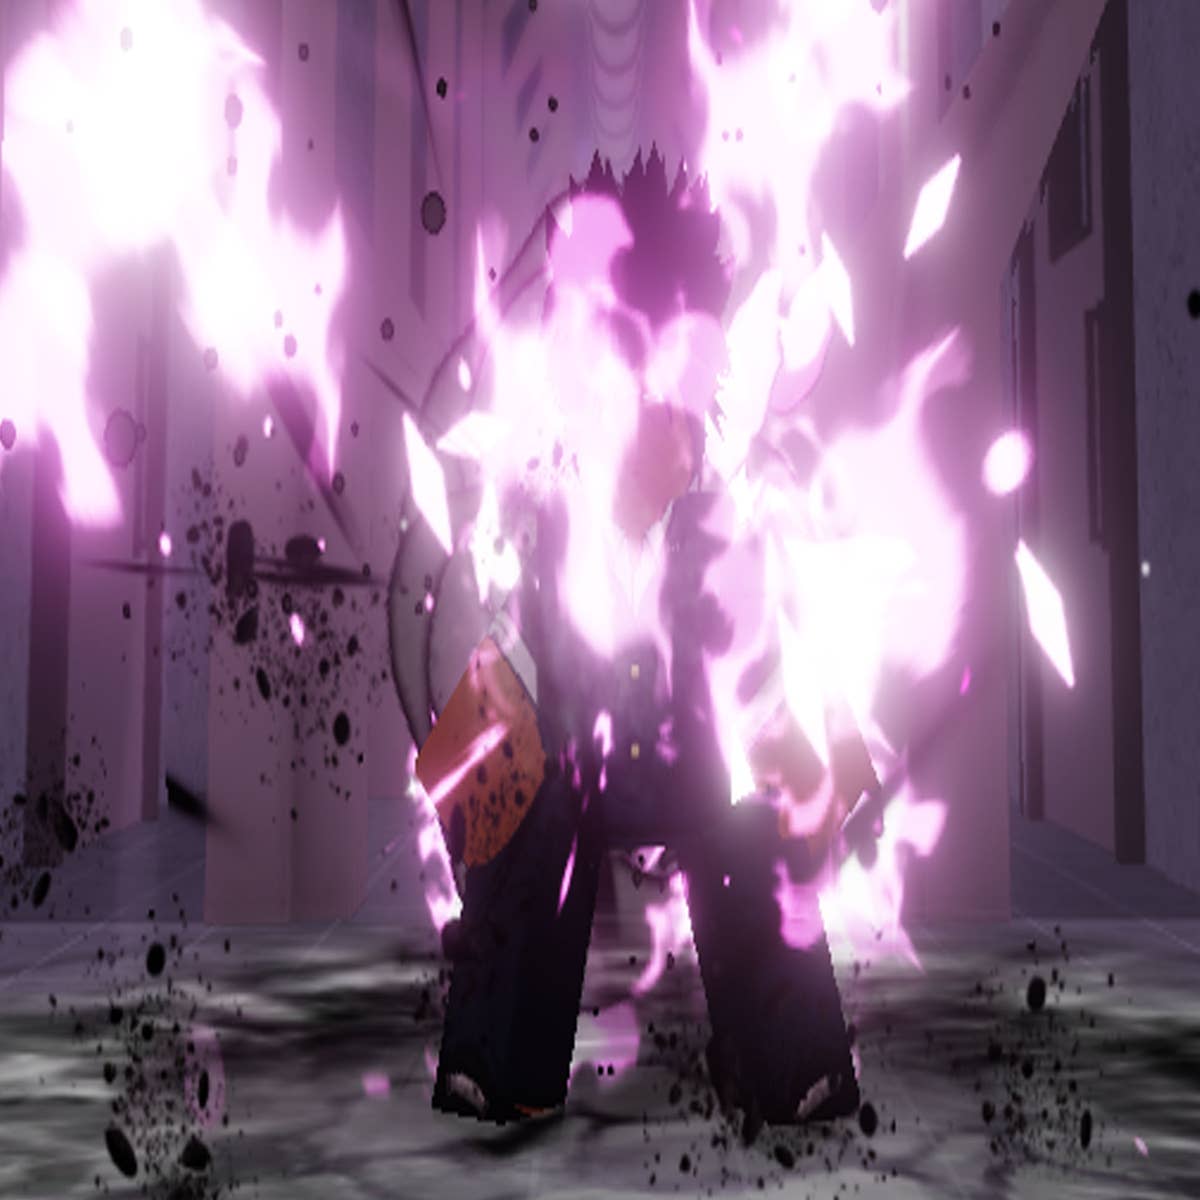 Anime Fighting Simulator X Special Abilities [December 2023] - MrGuider